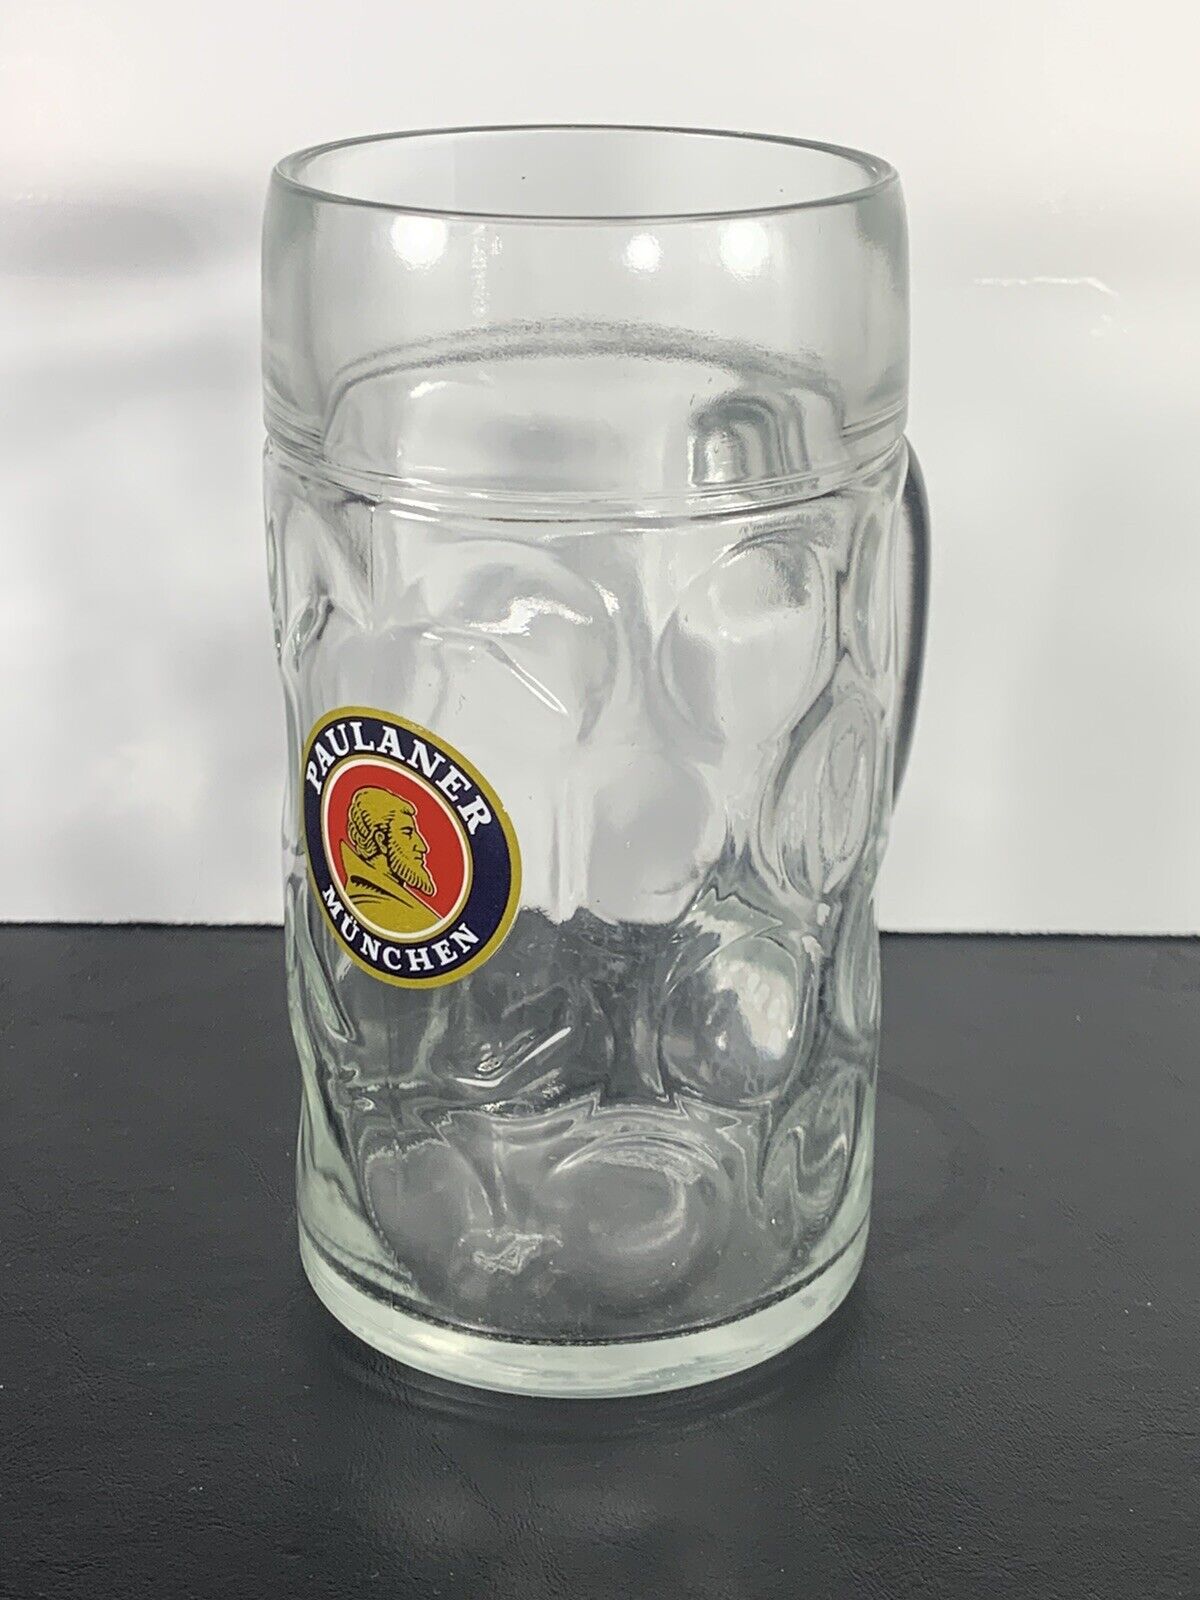 Paulaner Munchen Dimpled 1 liter German Munich Beer Stein Glass Mug Oktoberfest